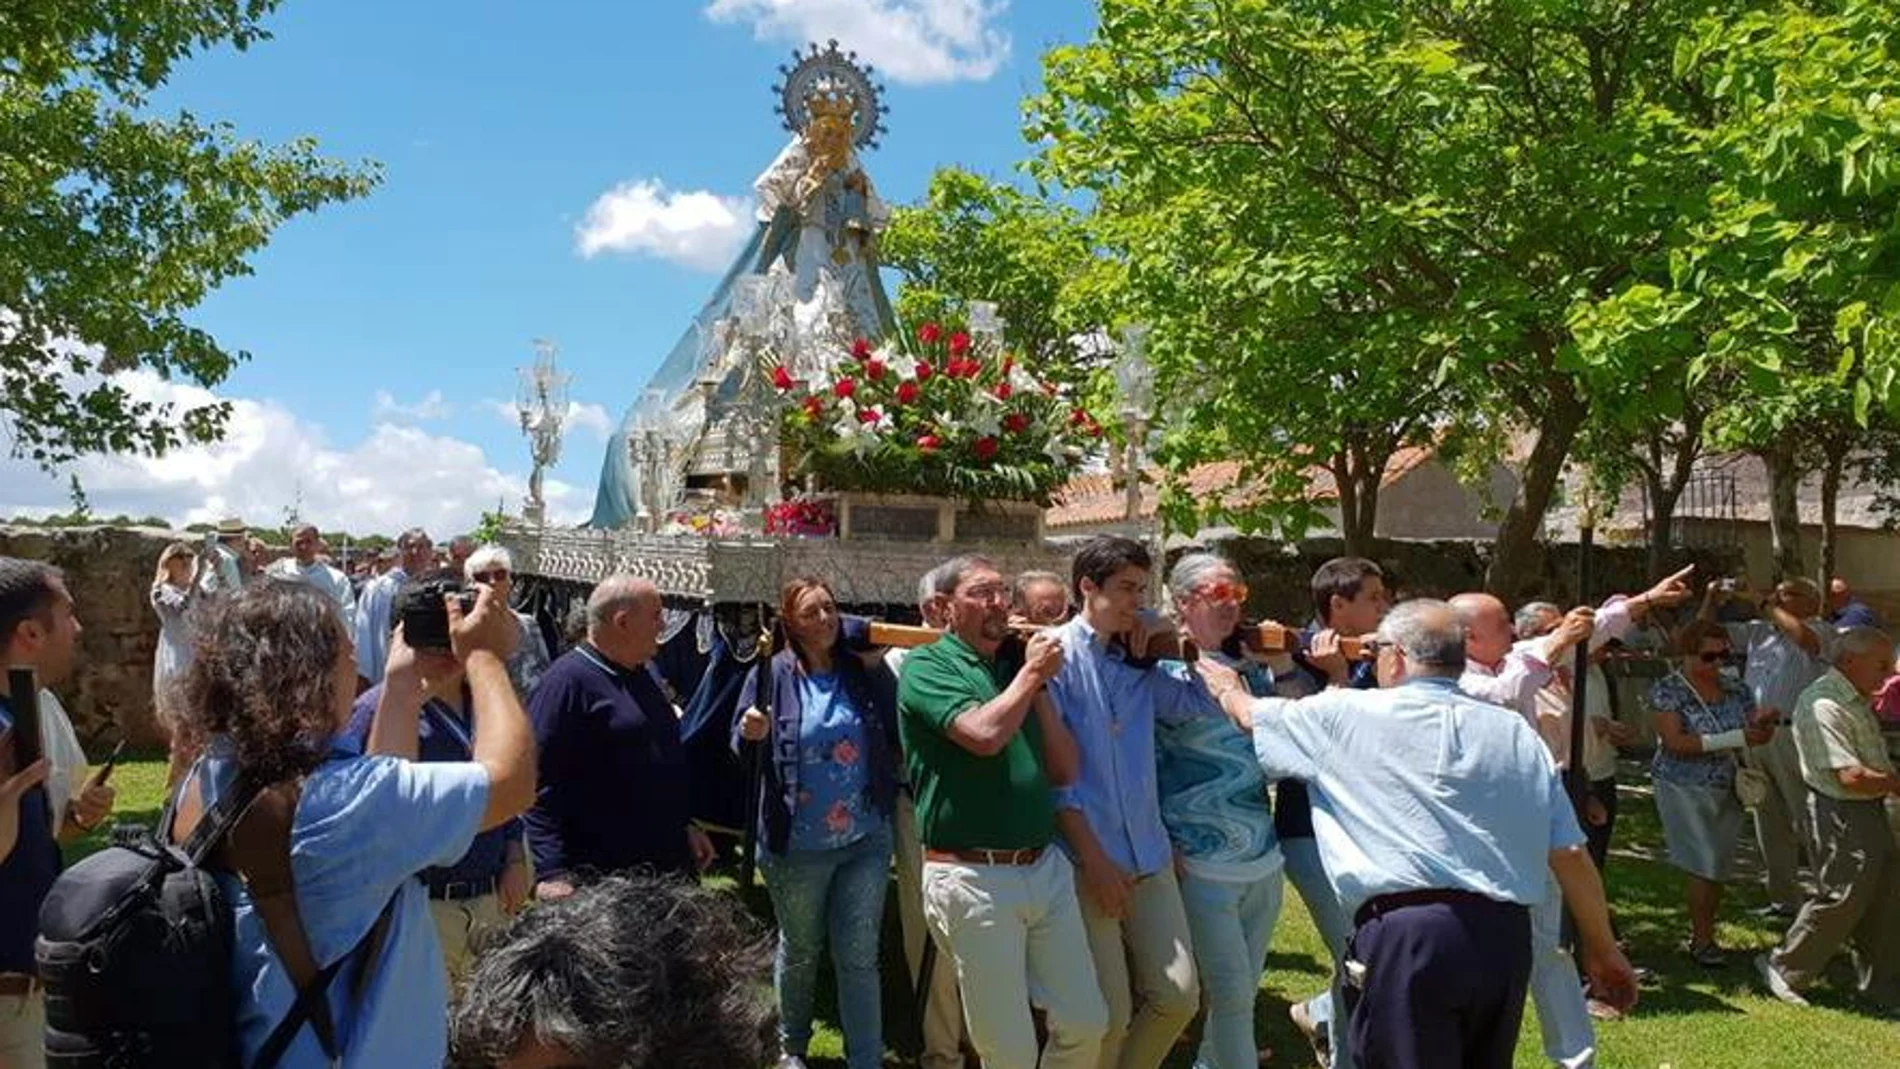 Numerosos fieles abulenses acompañan a la Virgen de Sonsoles, patrona de Ávila, portada a hombros por dieciséis anderos